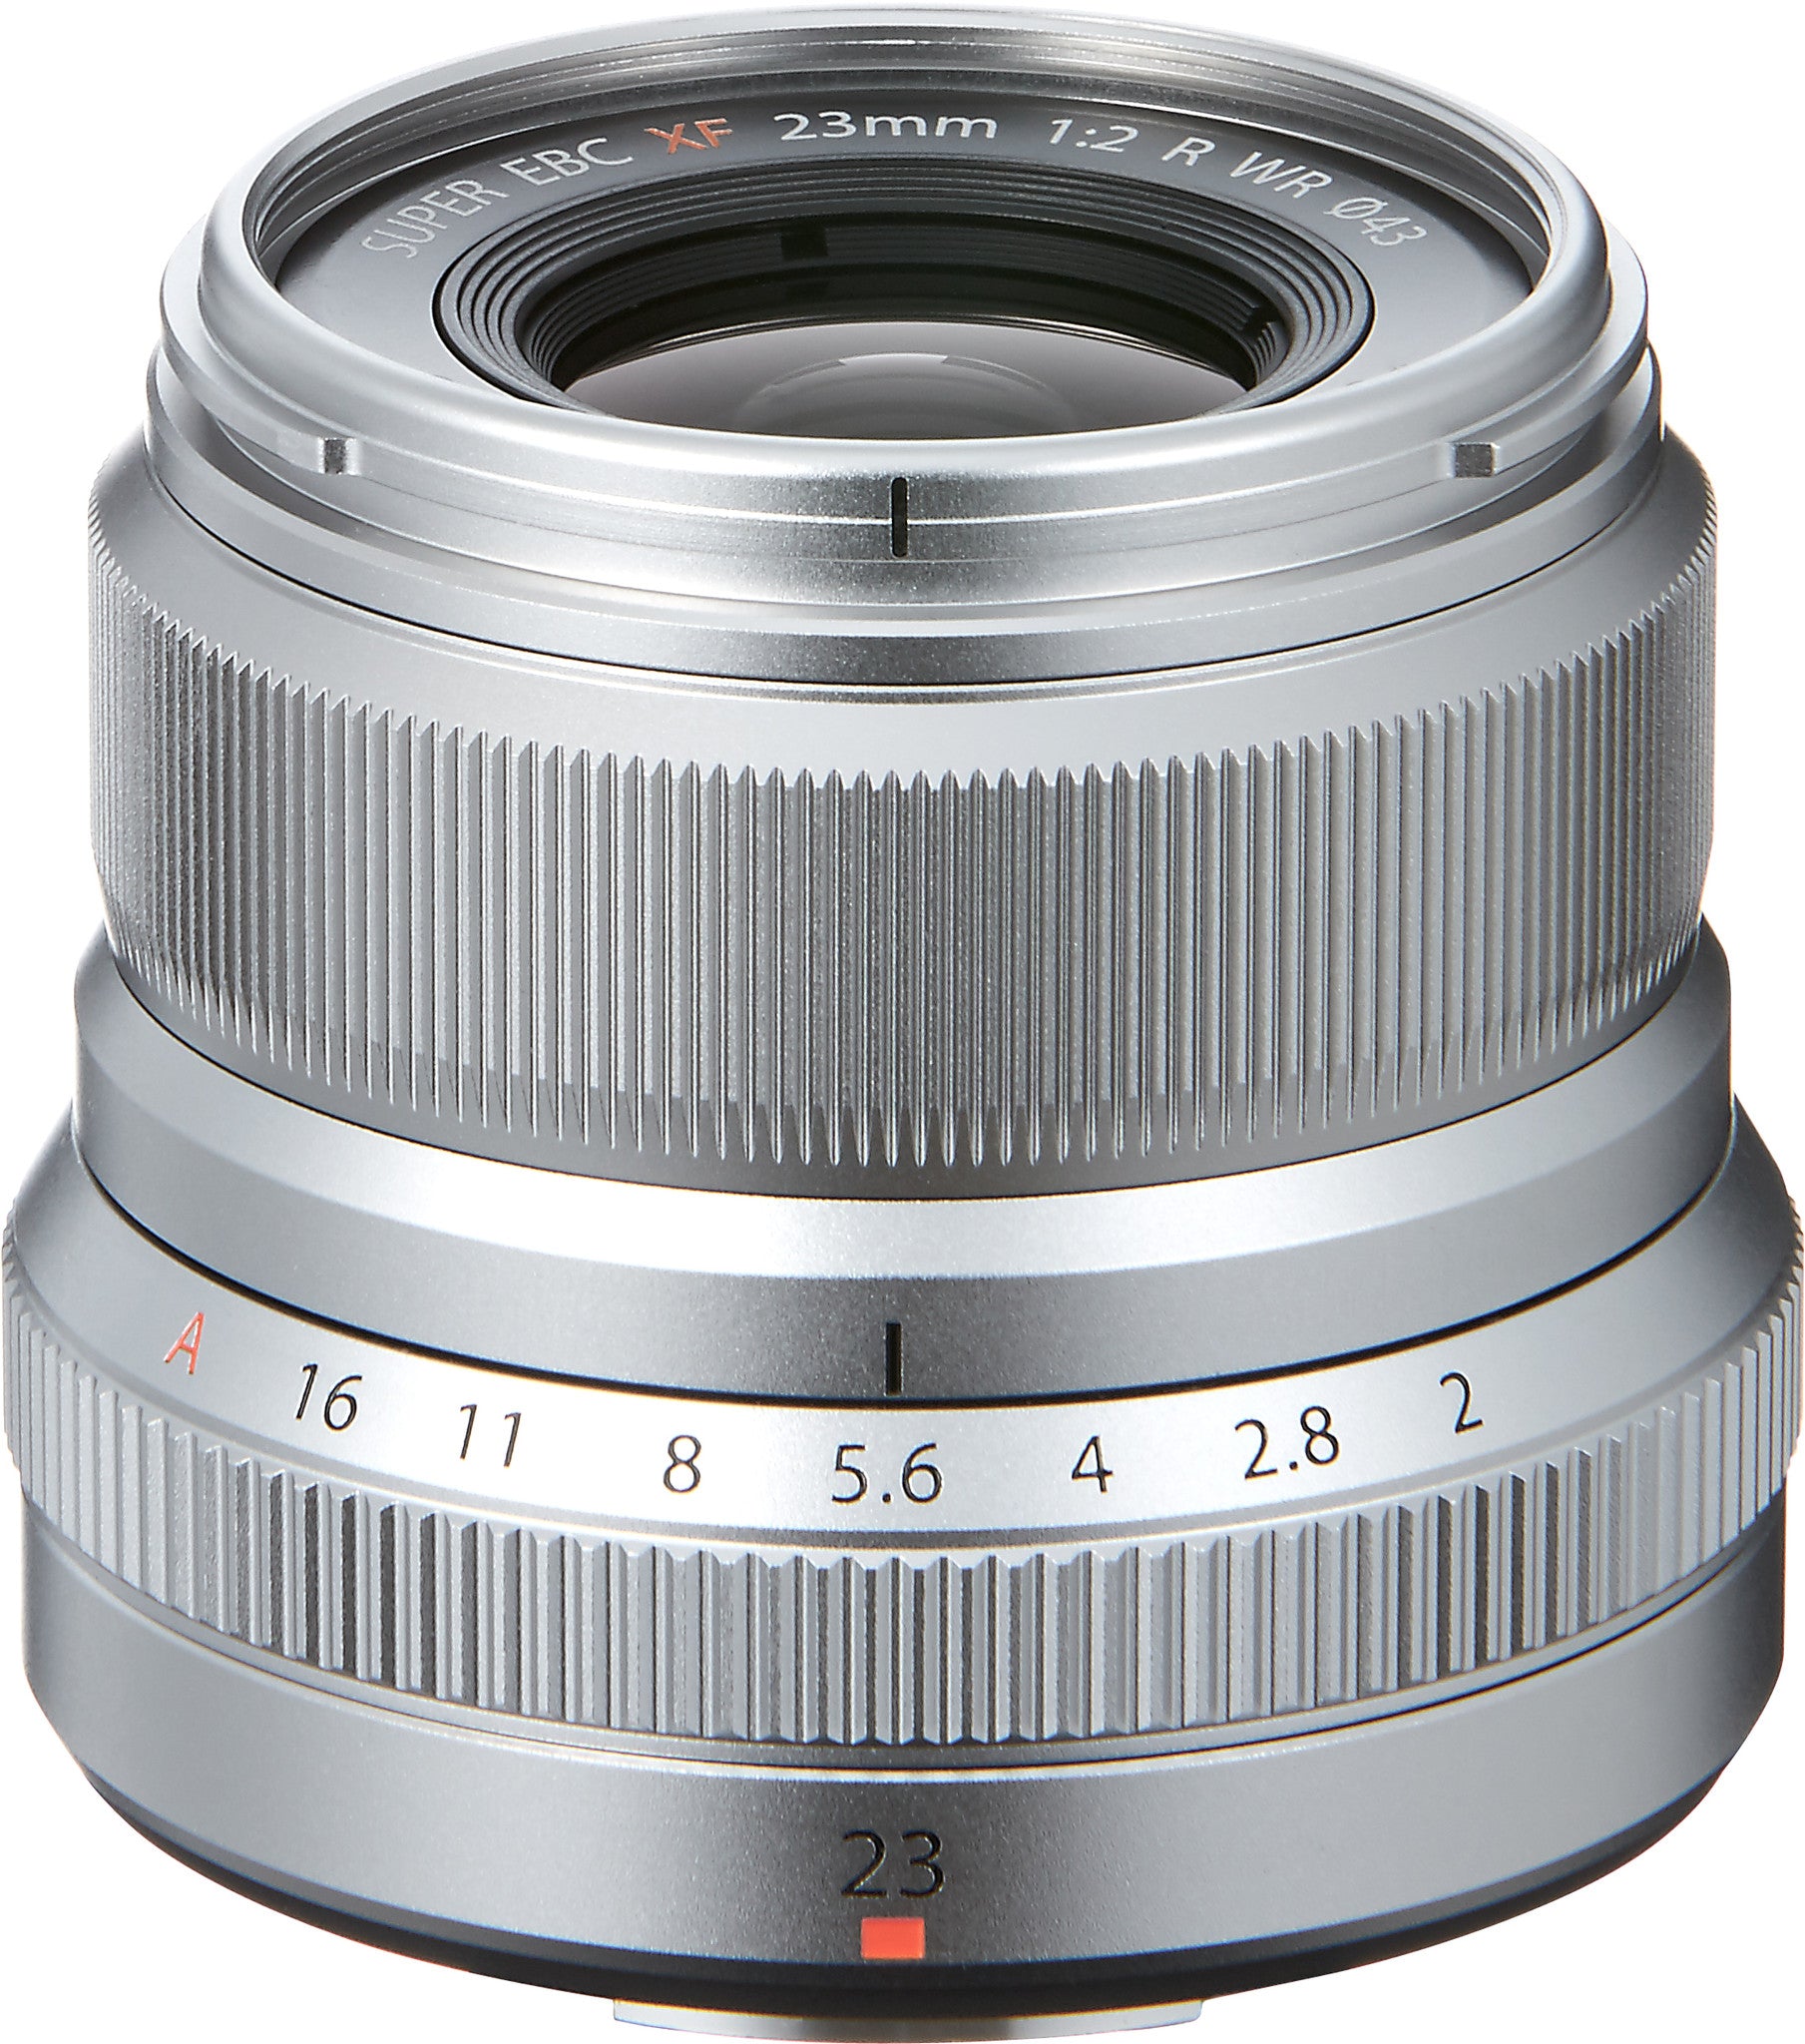 Fujifilm XF 23mm f2 R WR Lens (Silver), lenses mirrorless, Fujifilm - Pictureline  - 2